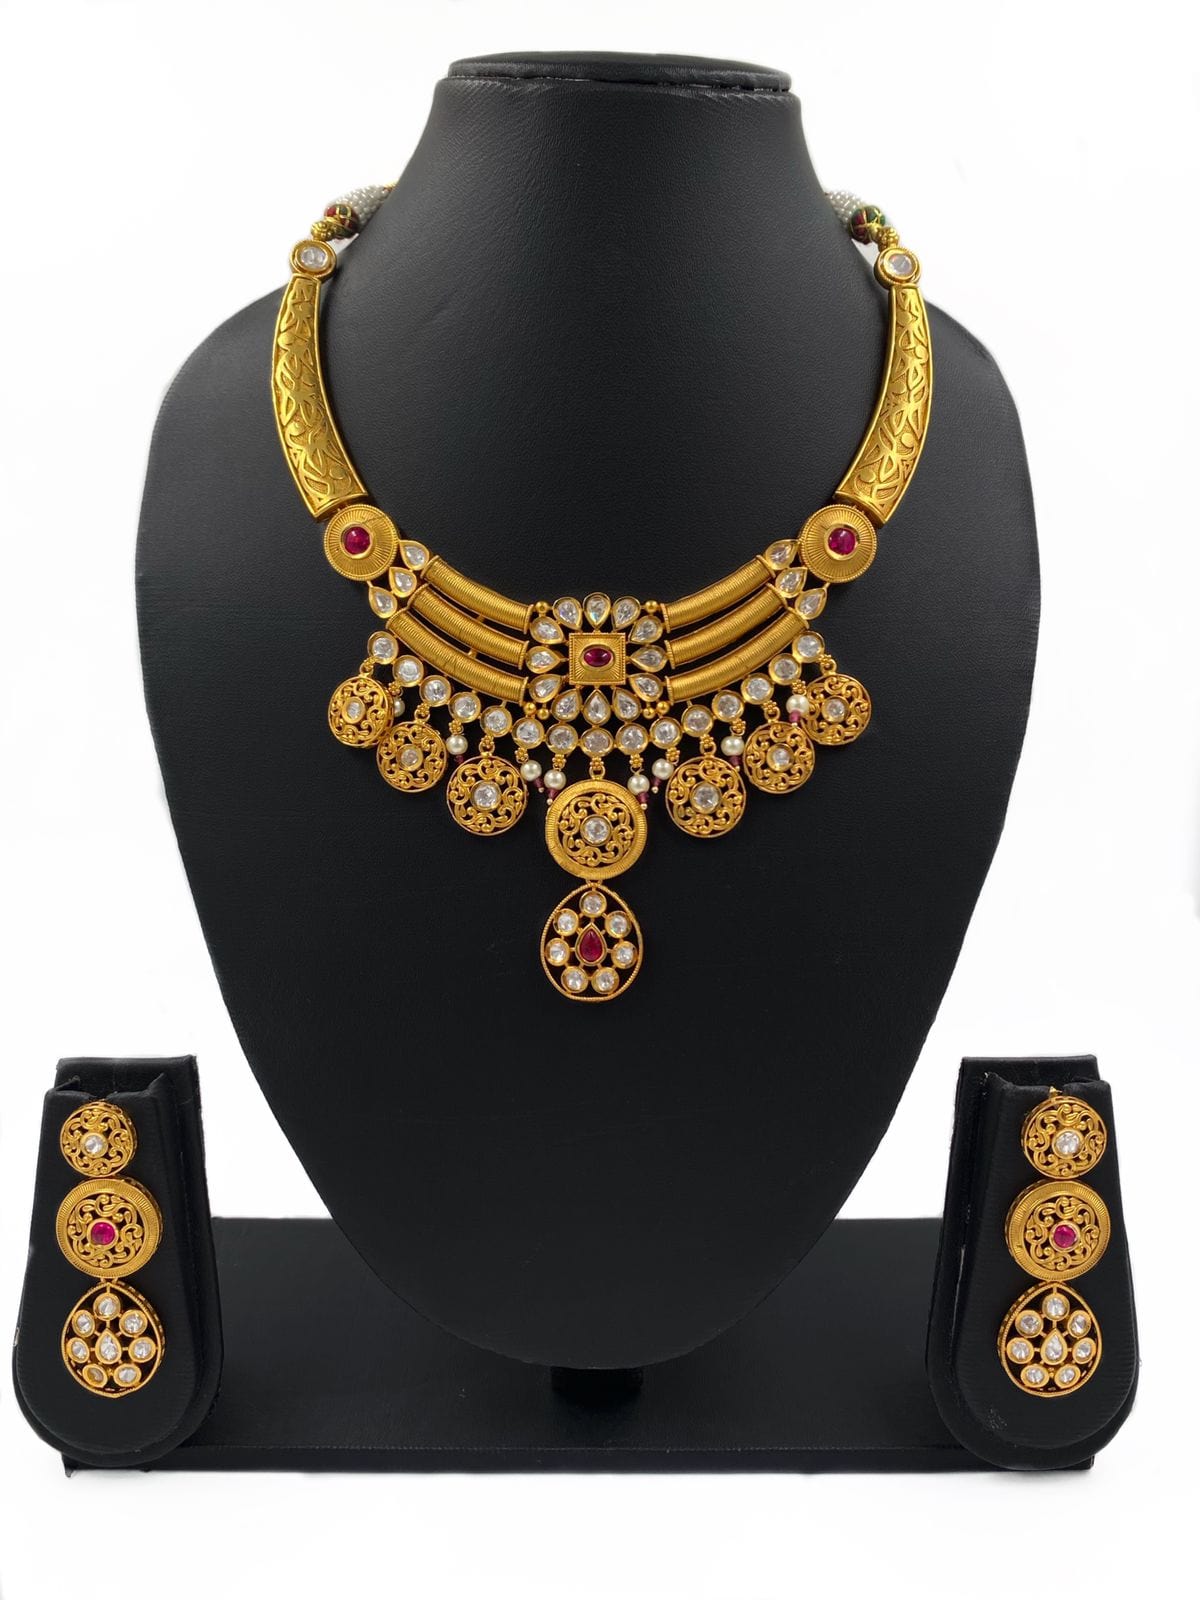 Gold Plated Modern Look Golden Necklace Set For Ladies By Gehna shop Antique Golden Necklace Sets